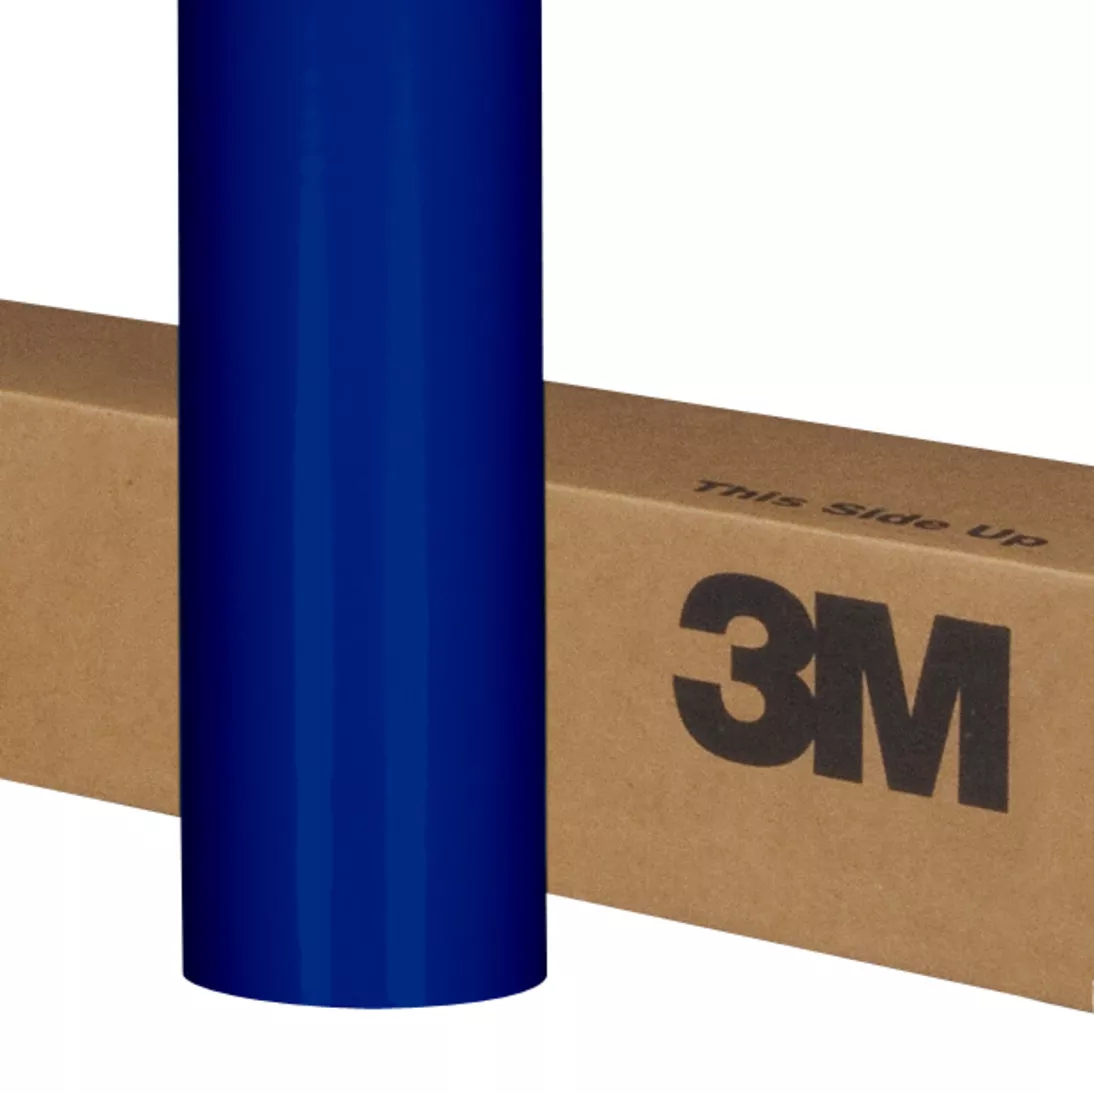 3M™ Scotchcal™ Translucent Graphic Film 3630-157, Sultan Blue, 48 in x
250 yd